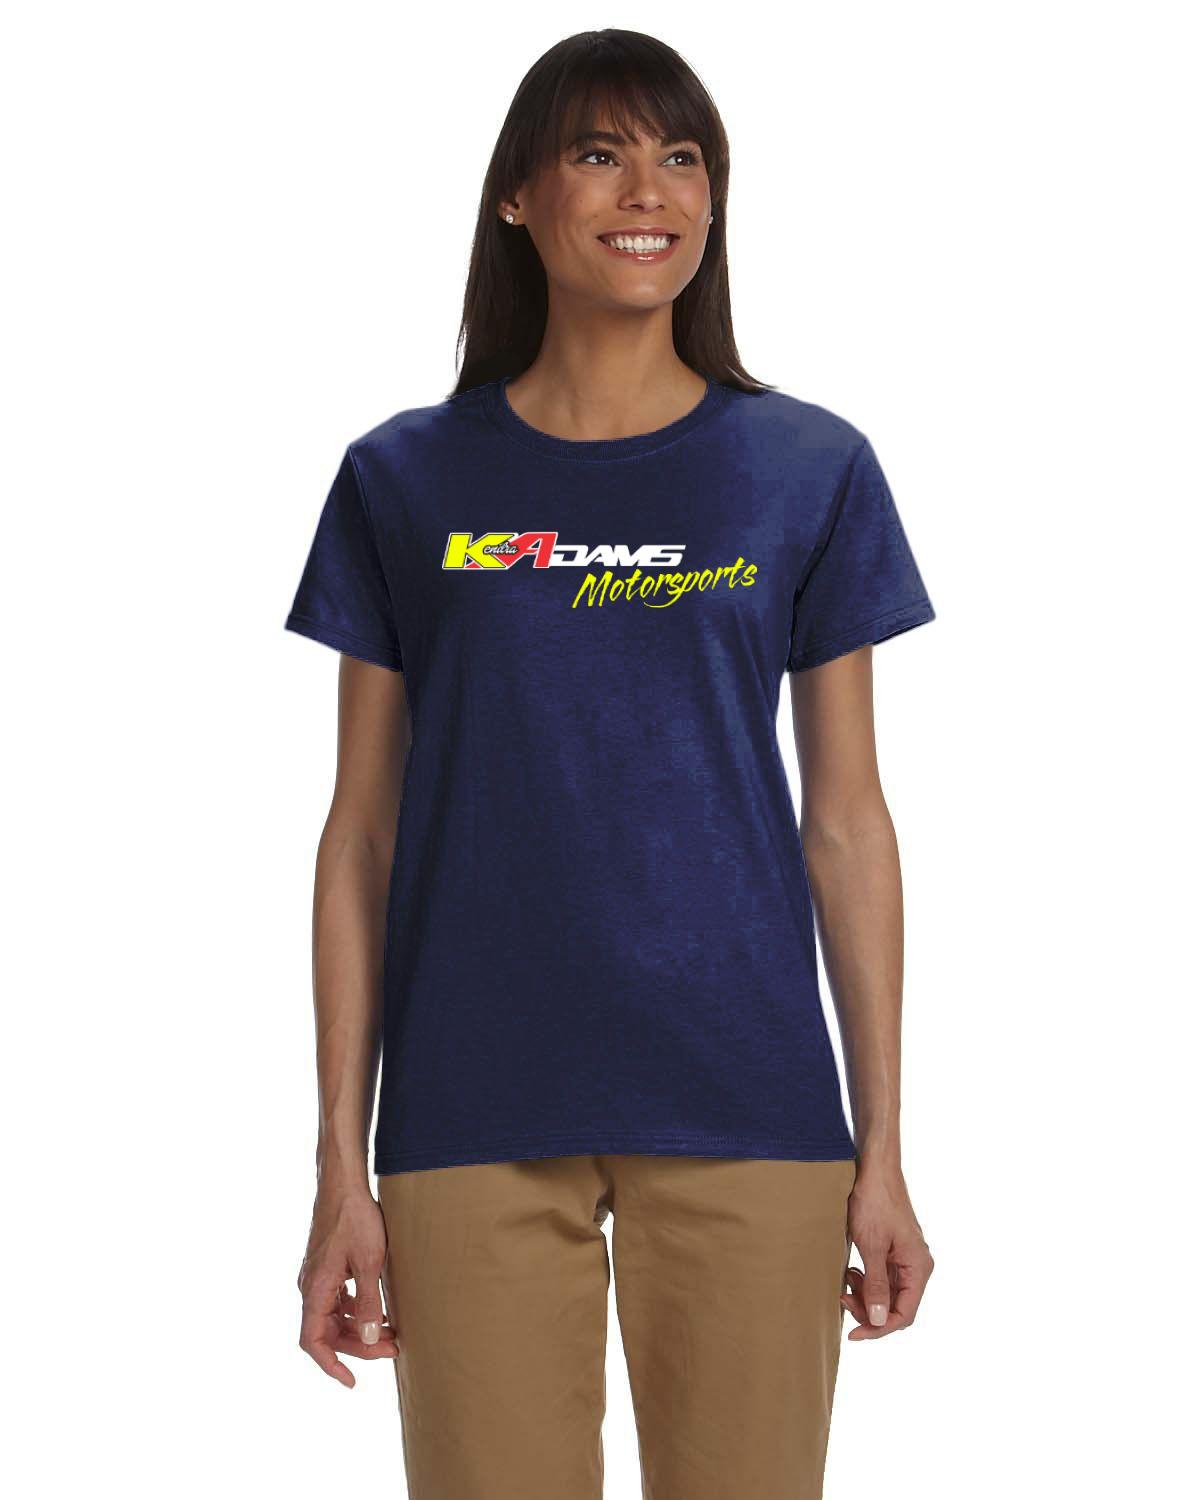 Kendra Adams Motorsports Women's Tshirt